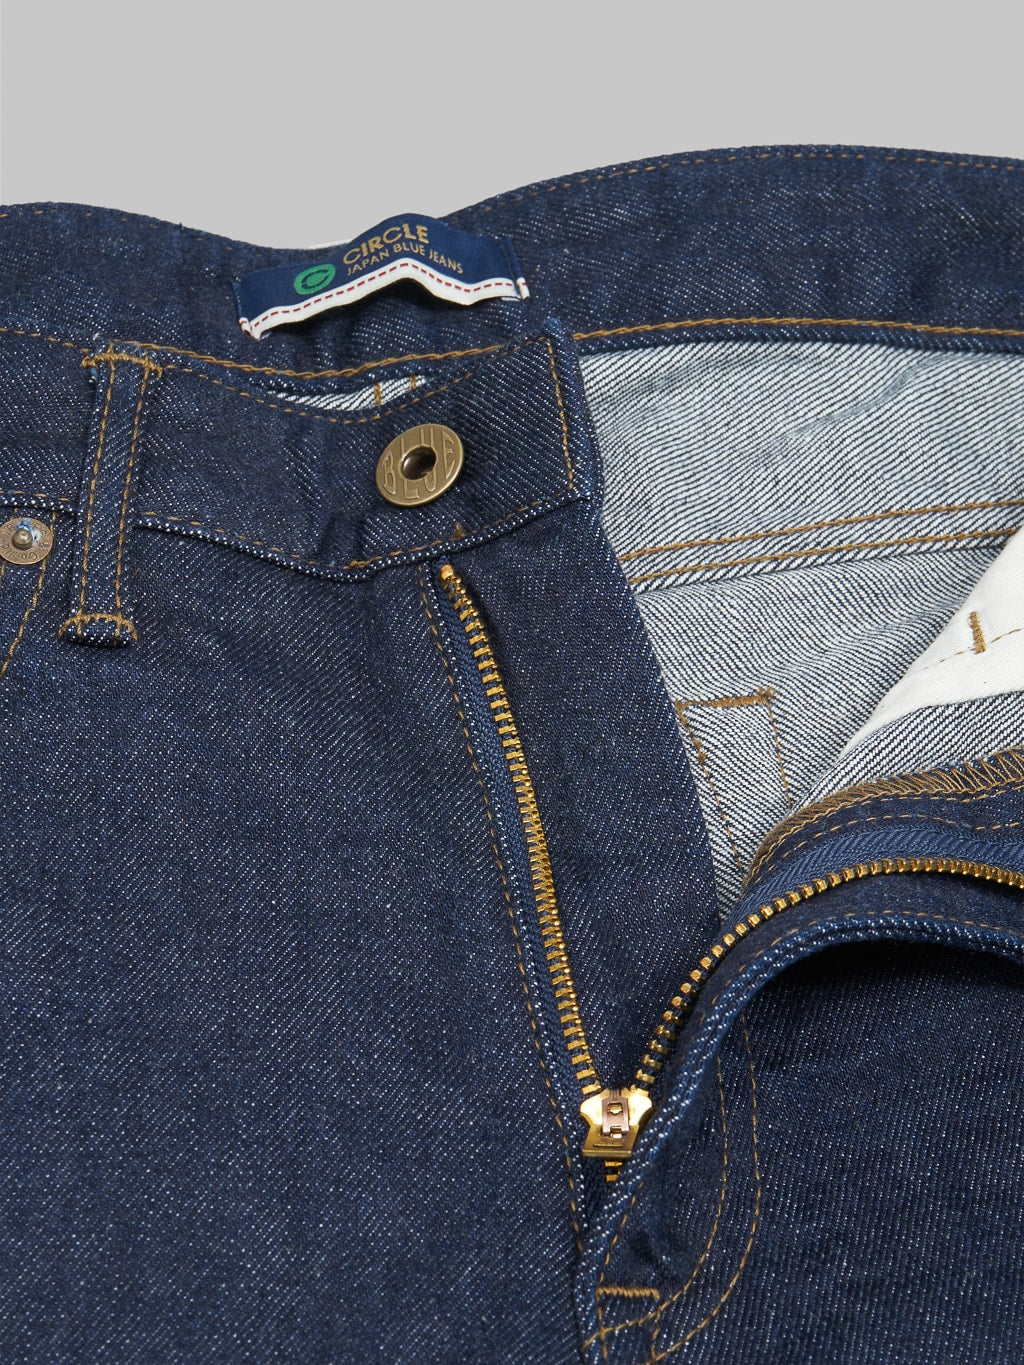 Japan Blue J205 Stretch Circle Tapered denim Jeans zipper